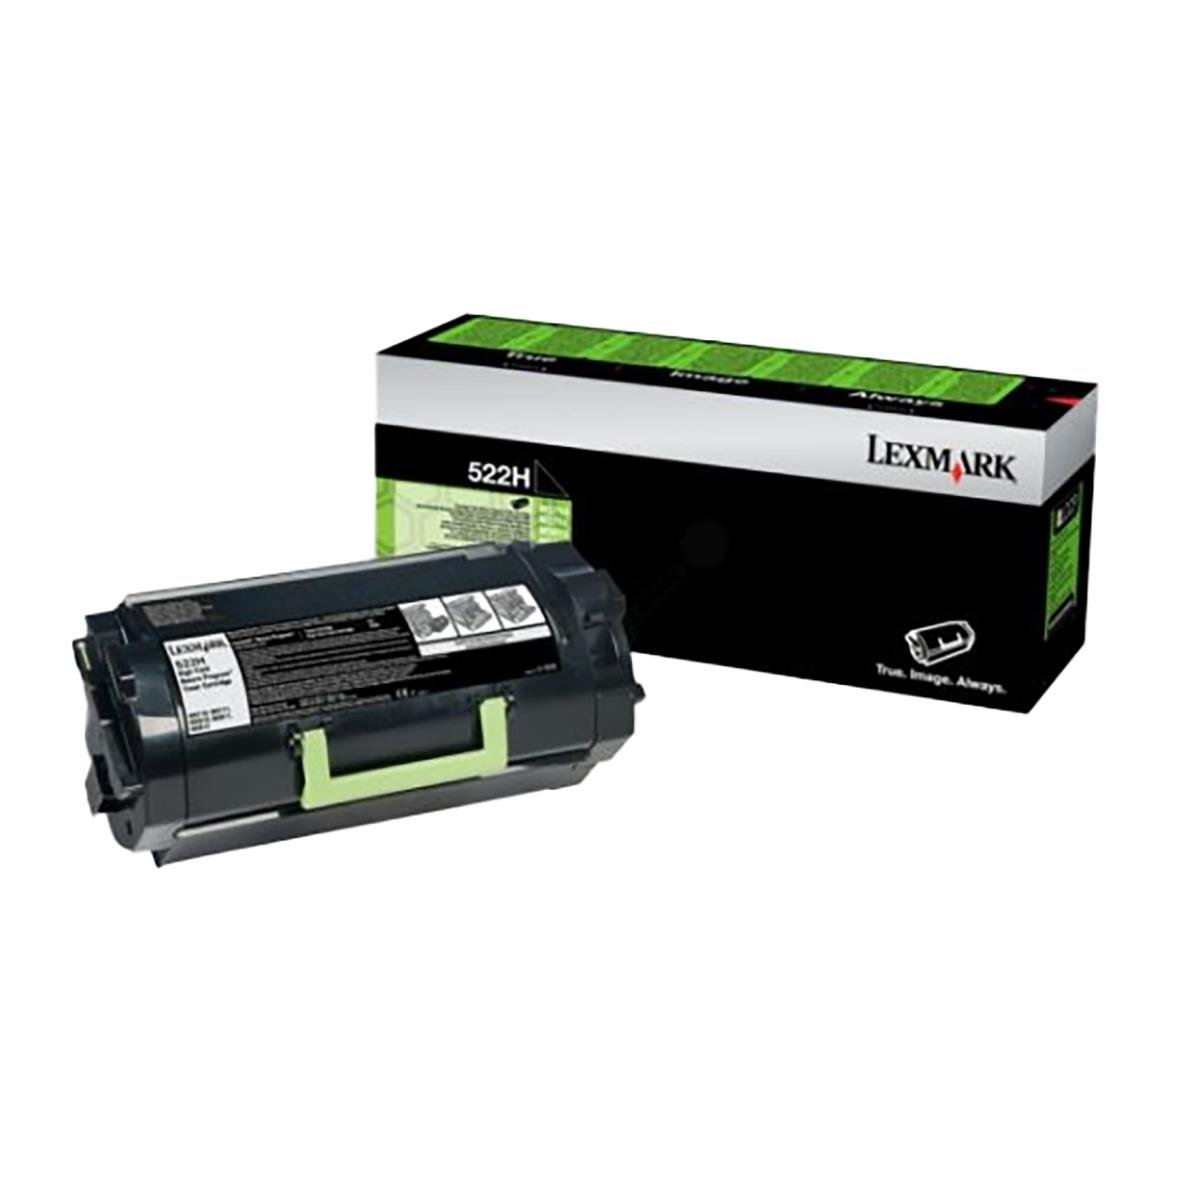 Lasertoner Lexmark 522H 25000 Sidor 52D2H00 Svart